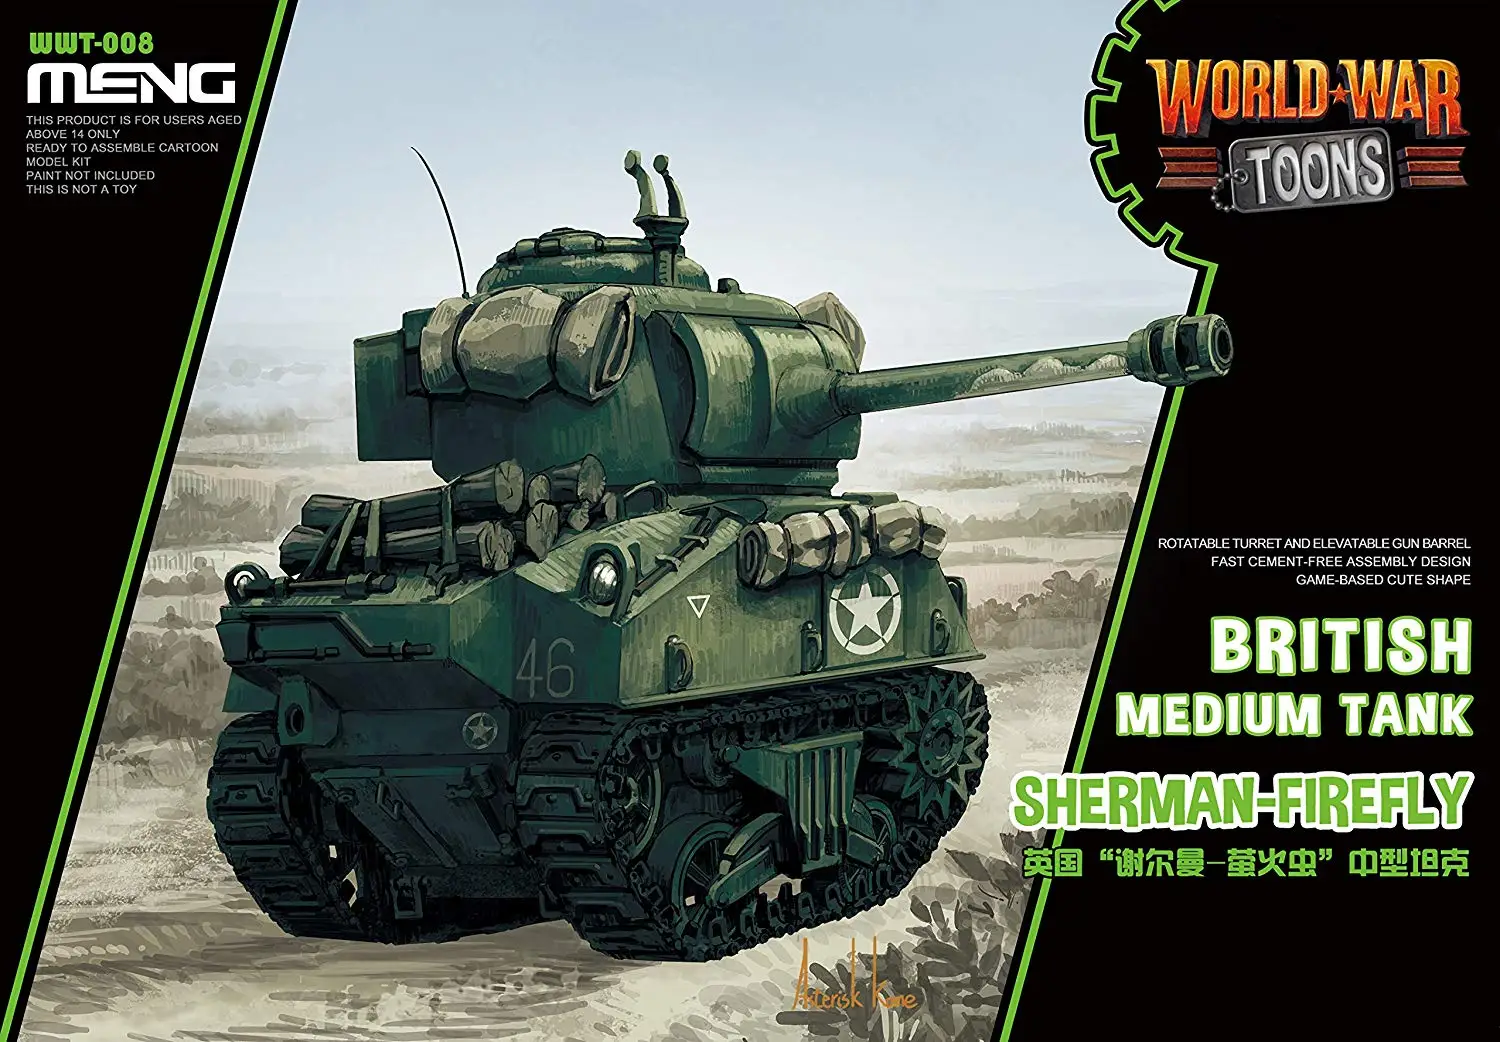 

Meng World War Toons Sherman-Firefly British Medium Tank Model kit Q Versin